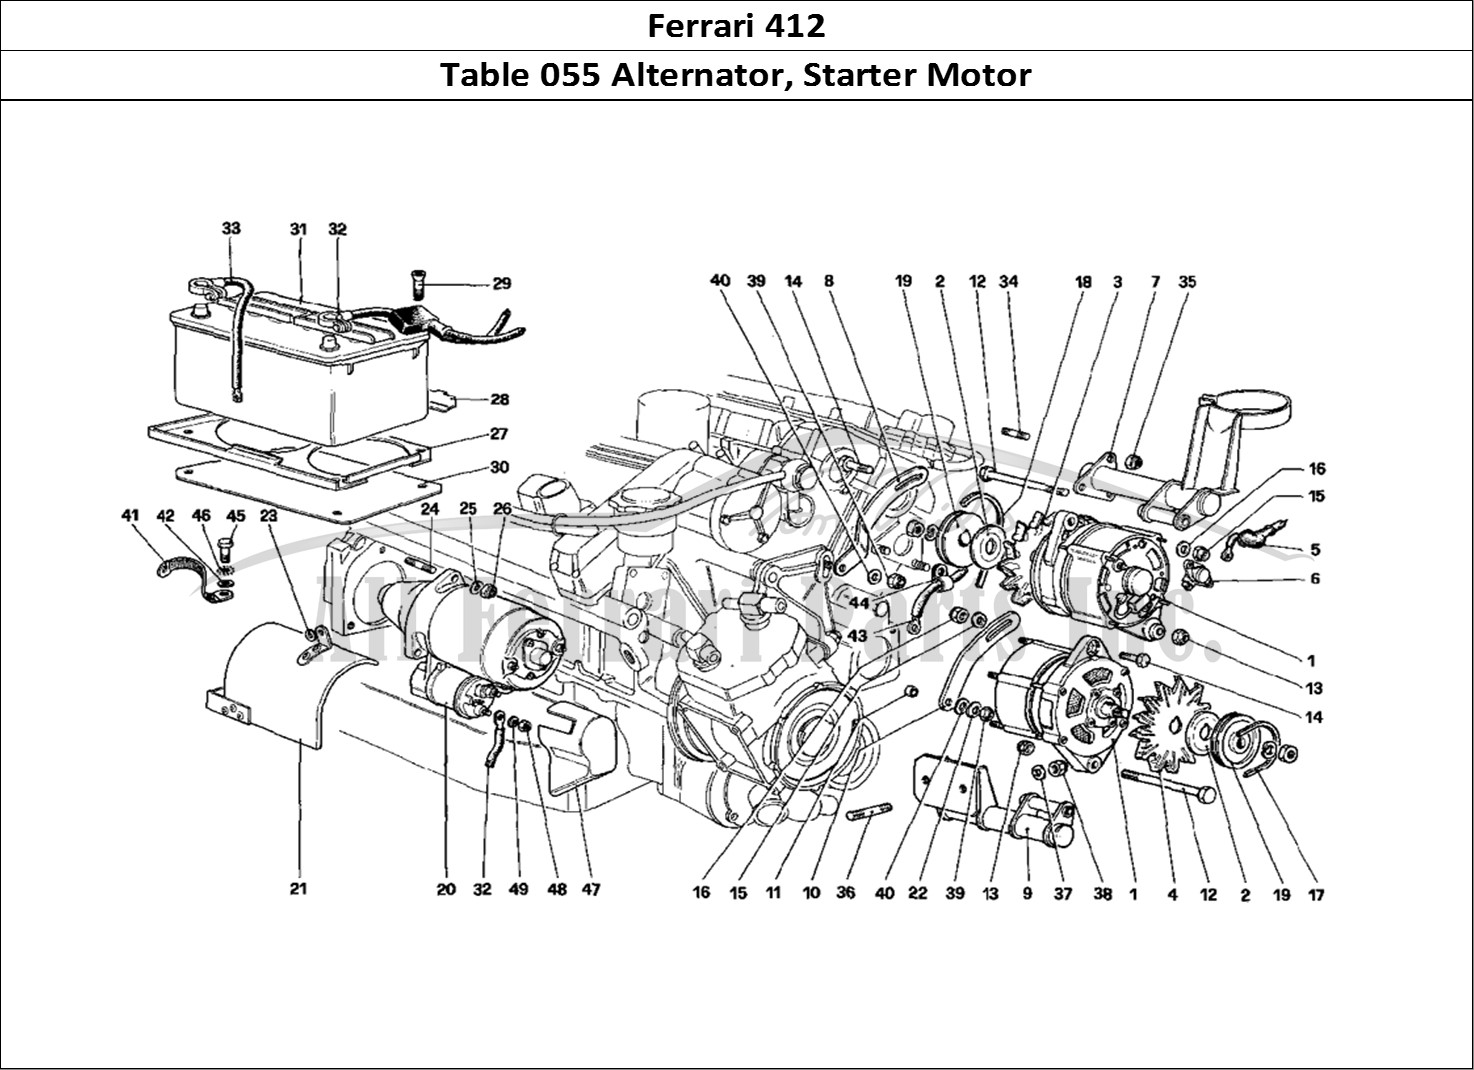 Ferrari Parts Ferrari 412 (Mechanical) Page 055 Alternators and Starting